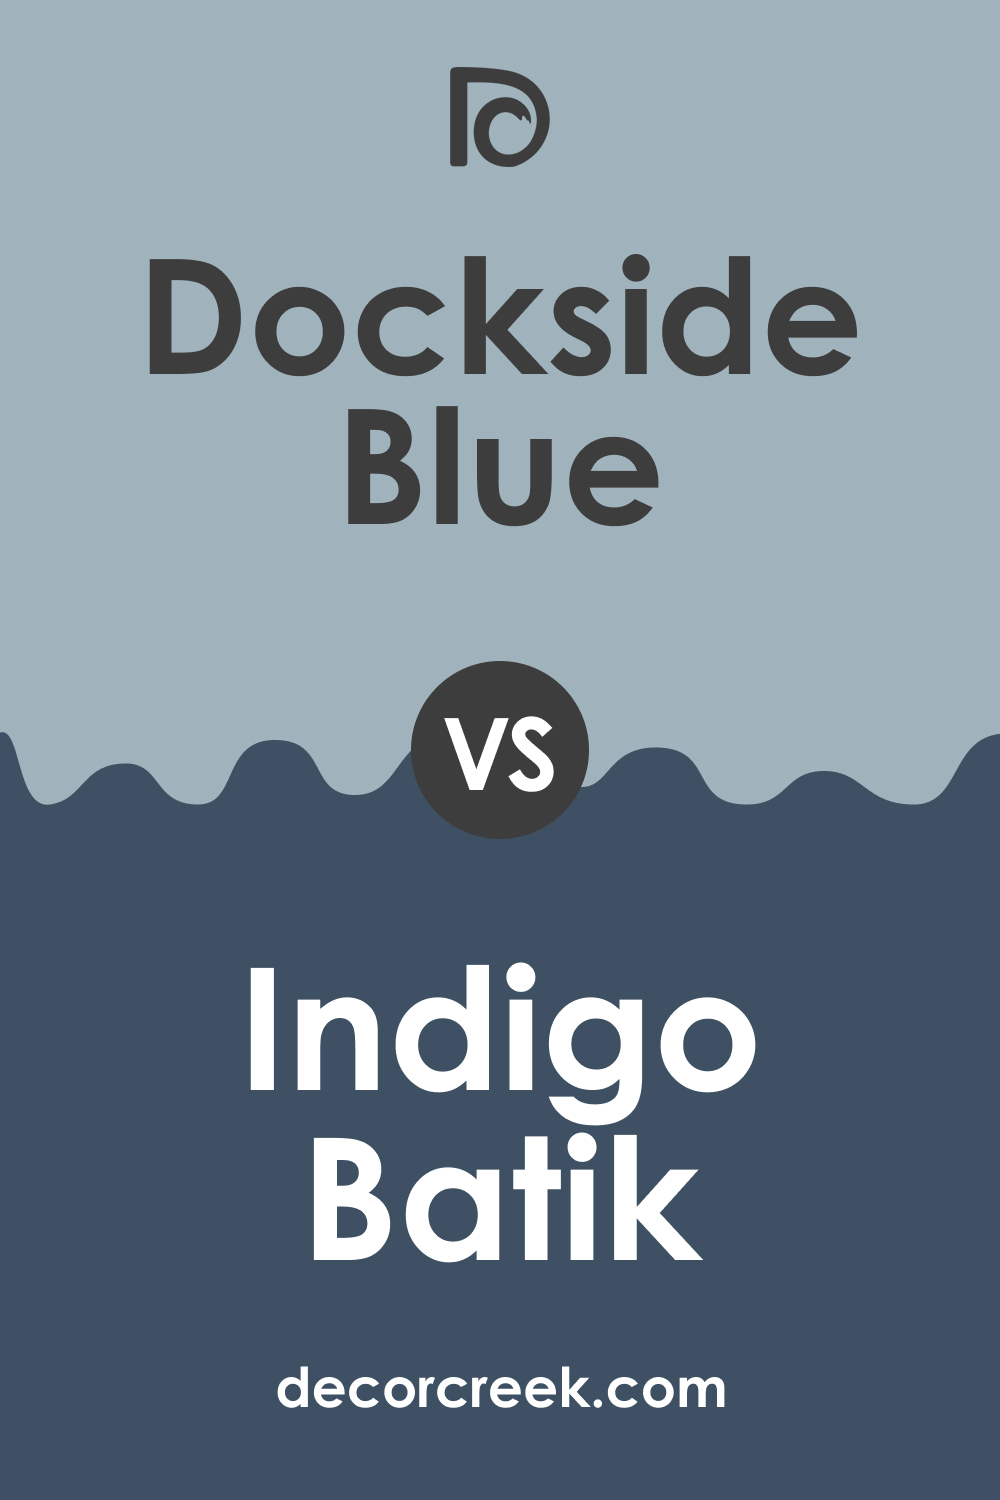 Dockside Blue vs Indigo Batik